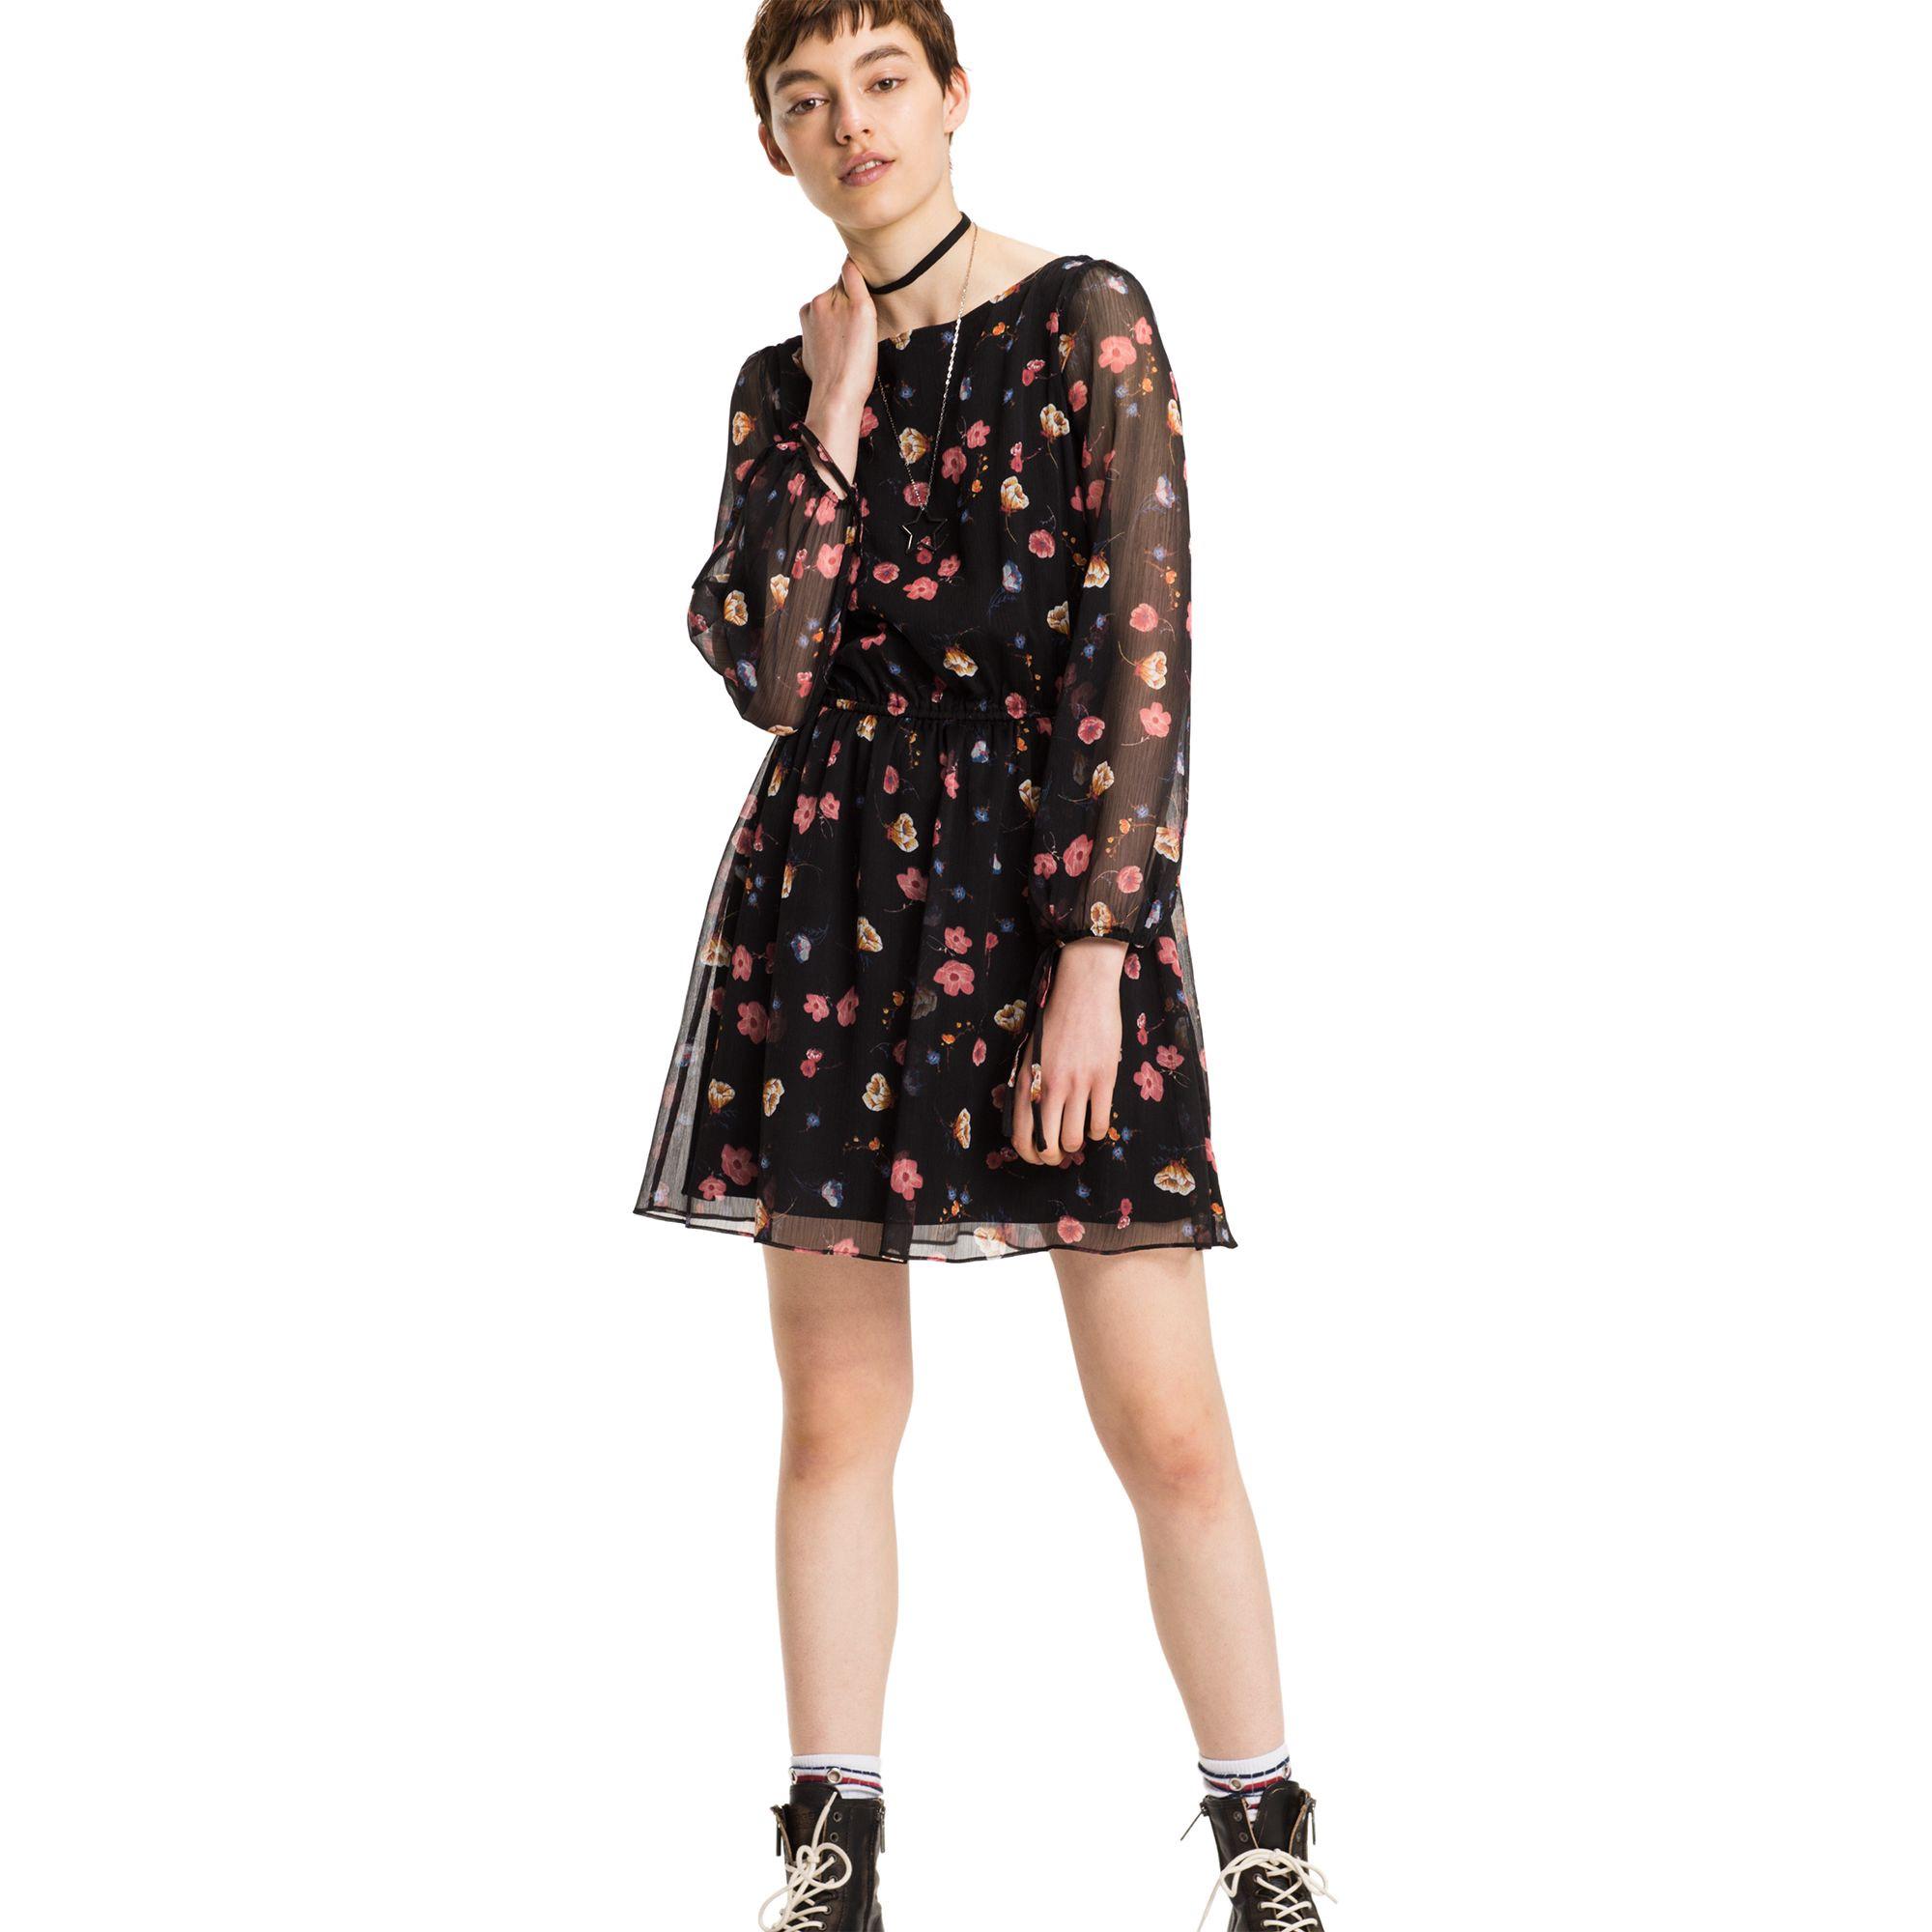 Tommy Hilfiger Dress Floral Flash Sales, 51% OFF | centro-innato.com